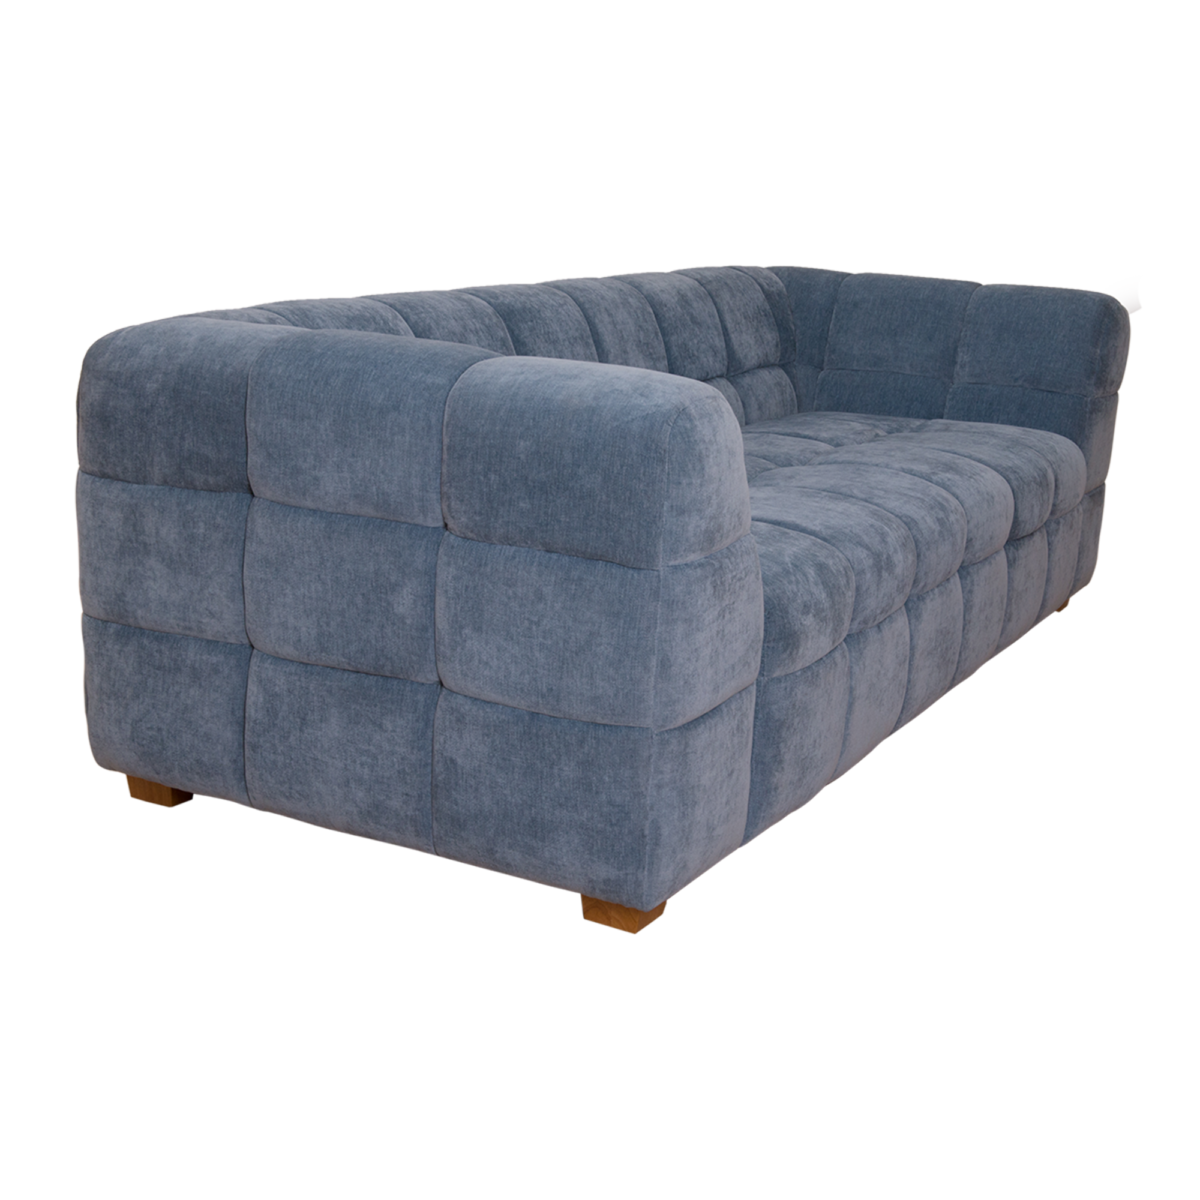 Parisian-3-Seater-Upholstered-Sofa-CO052-3S-7